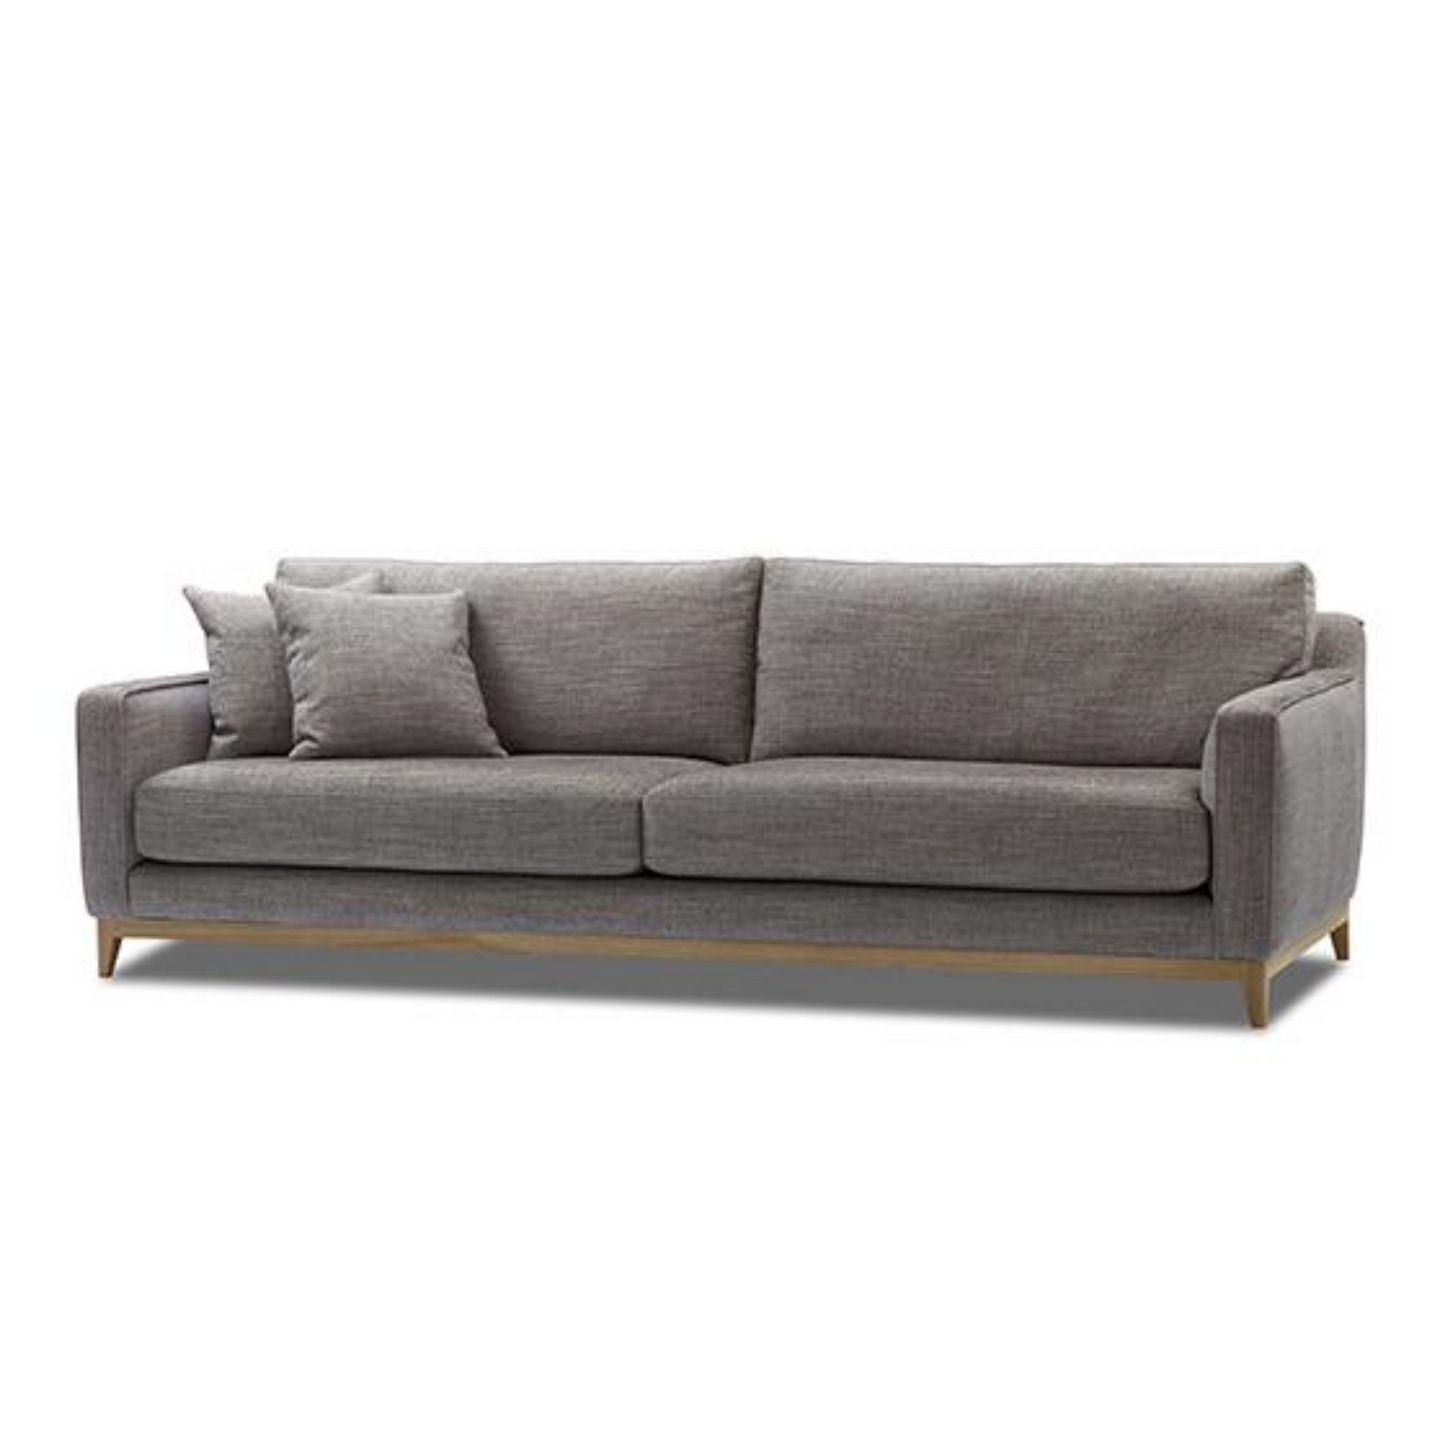 Barker Sofa by Molmic